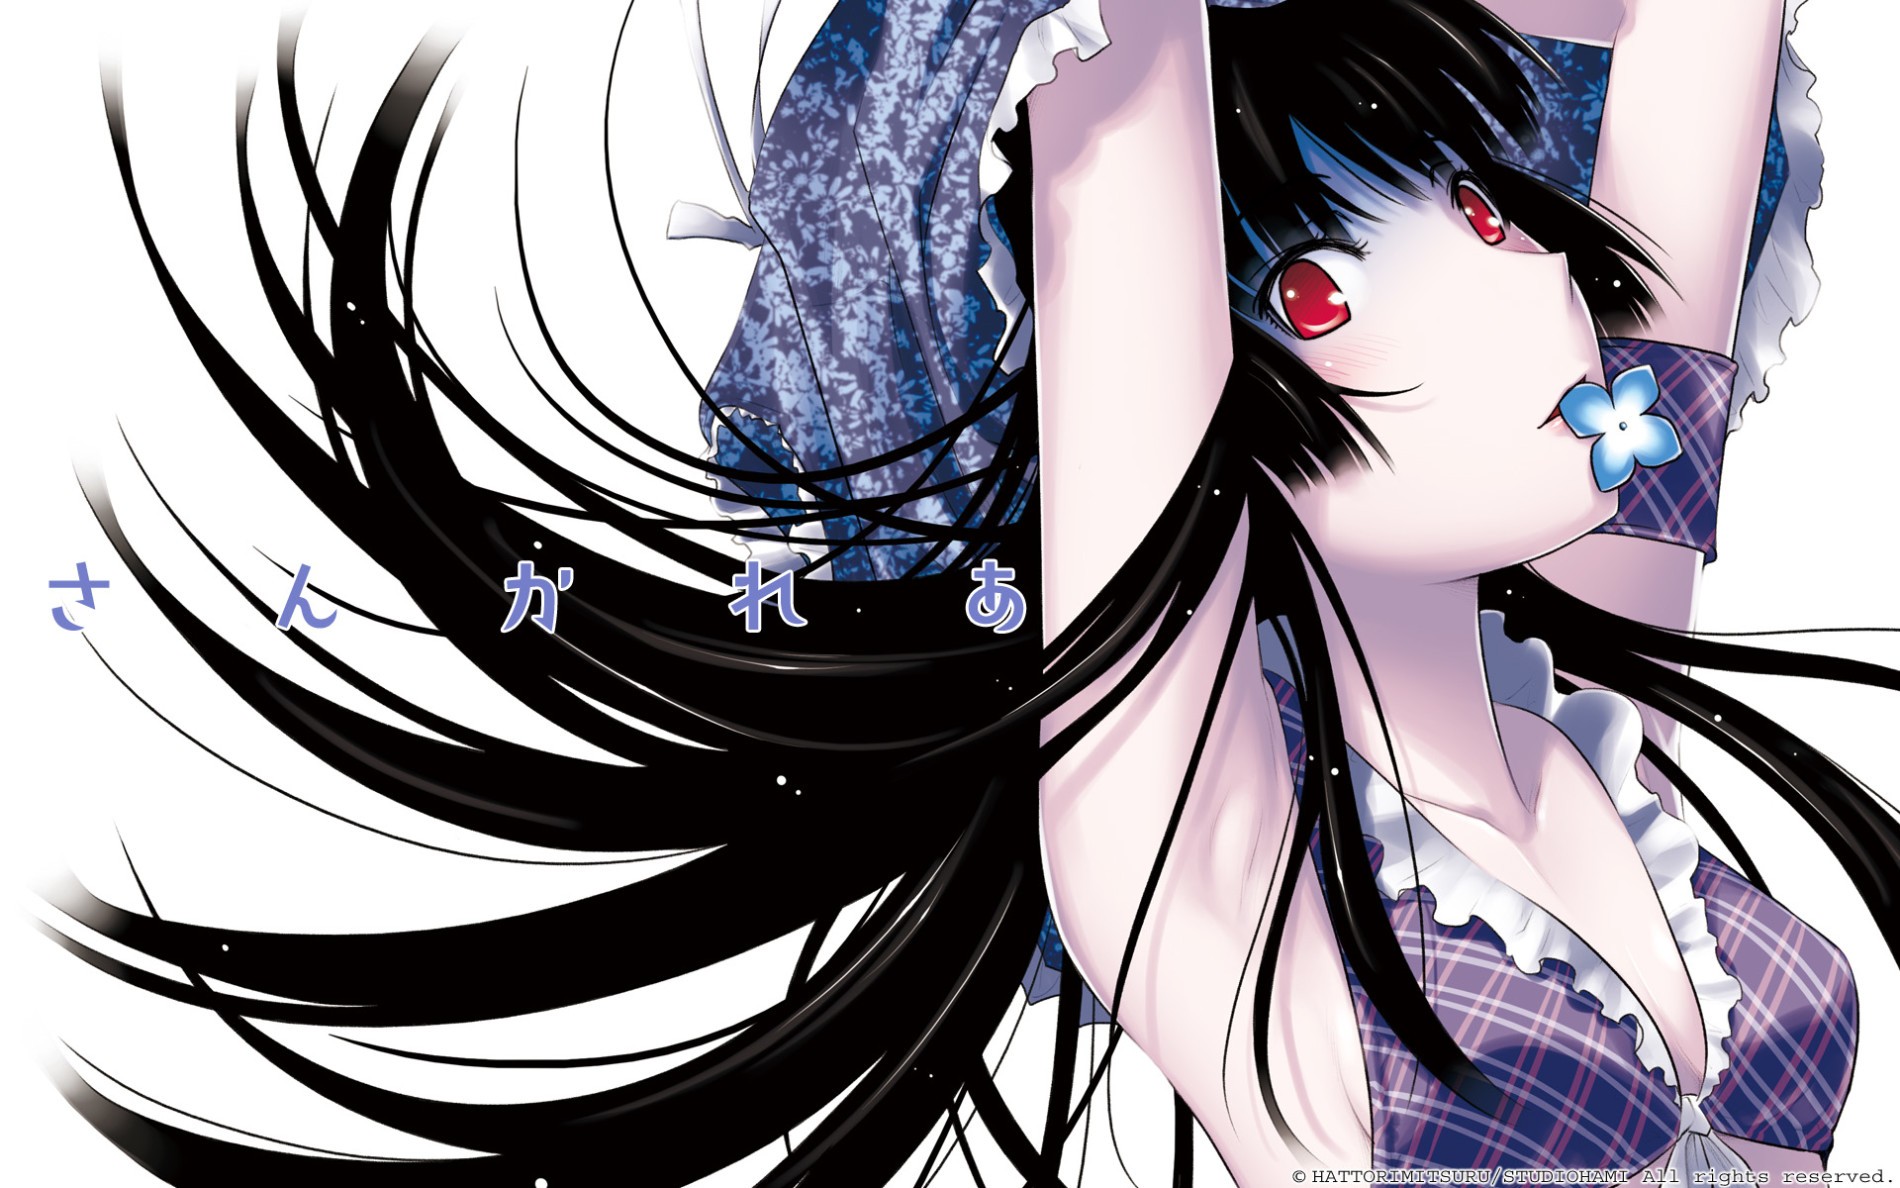 Sankarea and dusk maiden of Amnesia monster romance anime